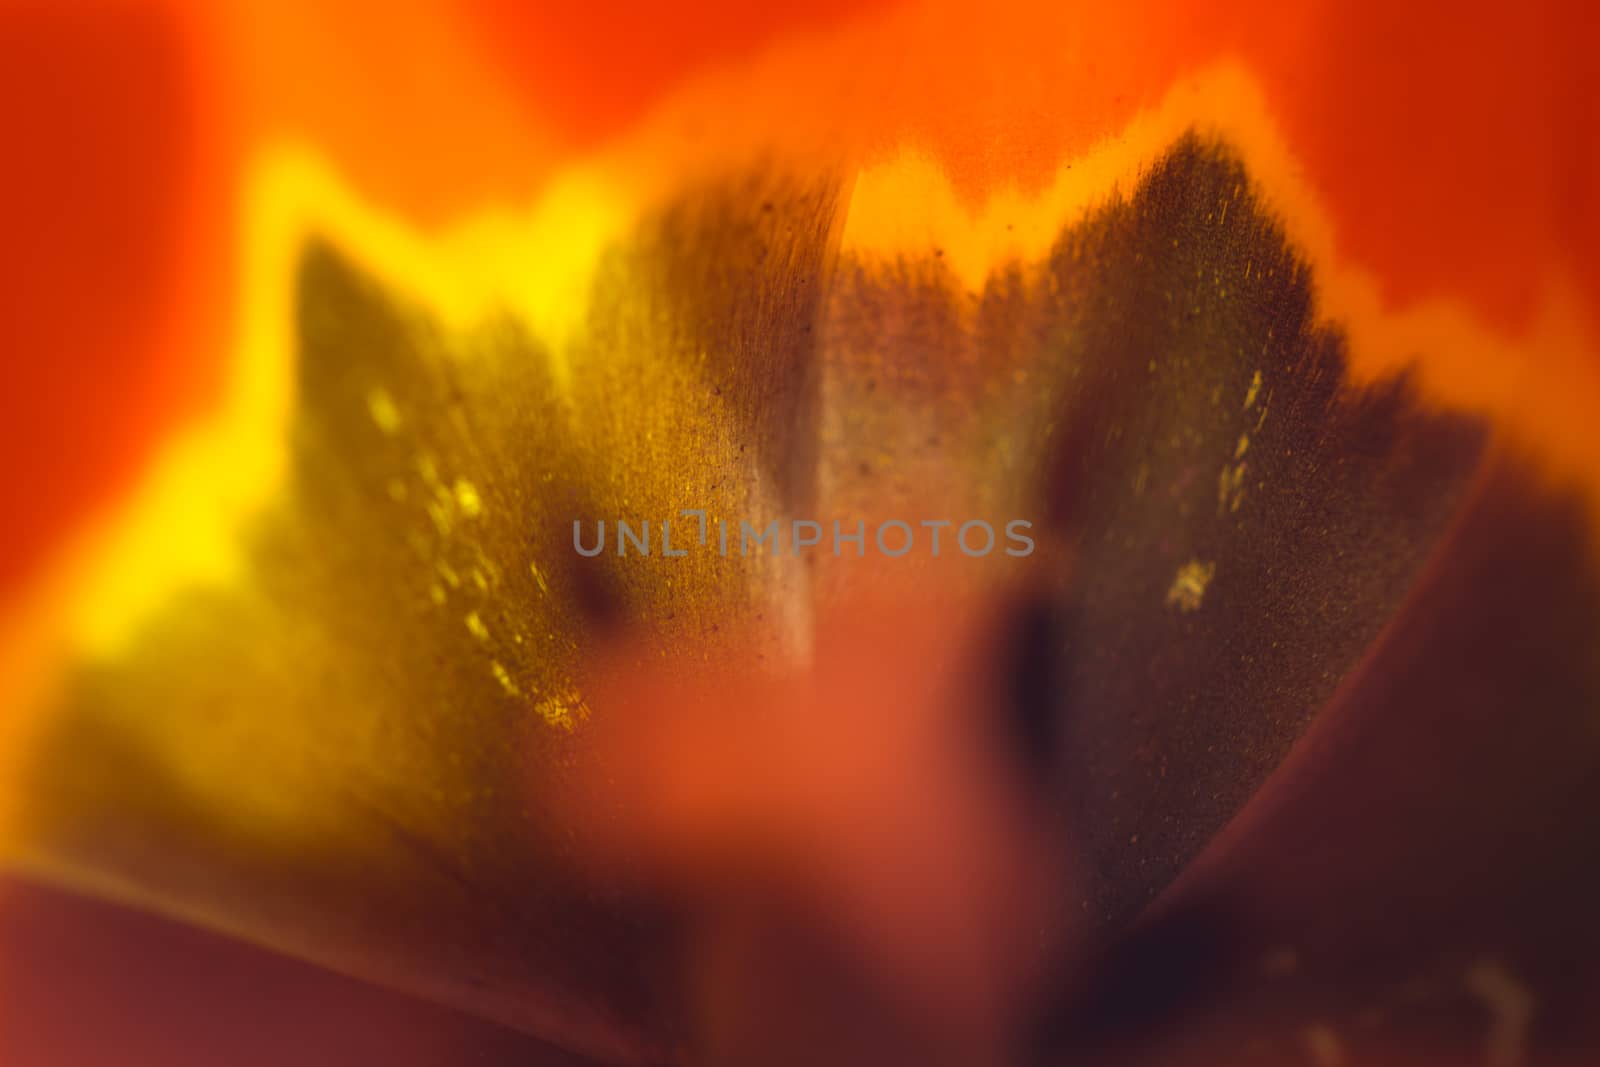 Abstract tulip macro shot by tadeush89